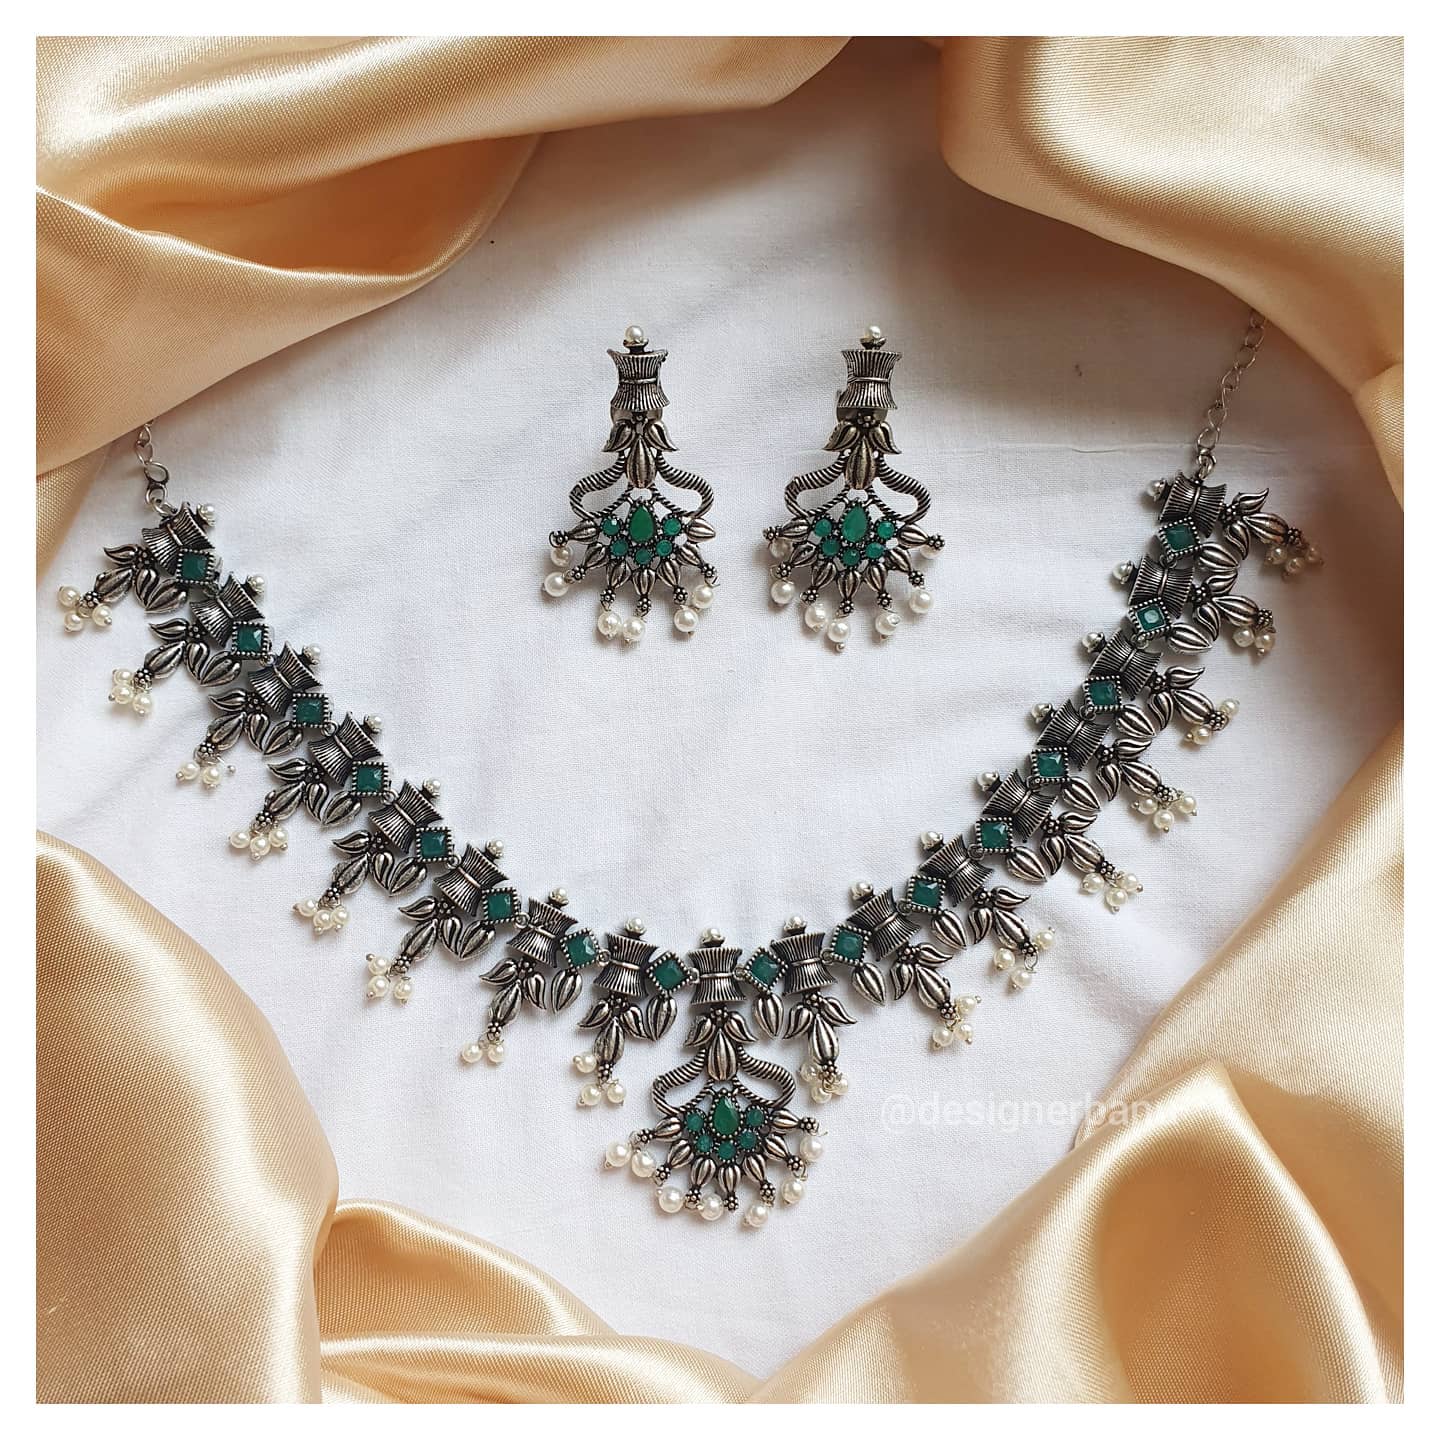 Oxidized silver chocker & matching earrings in green